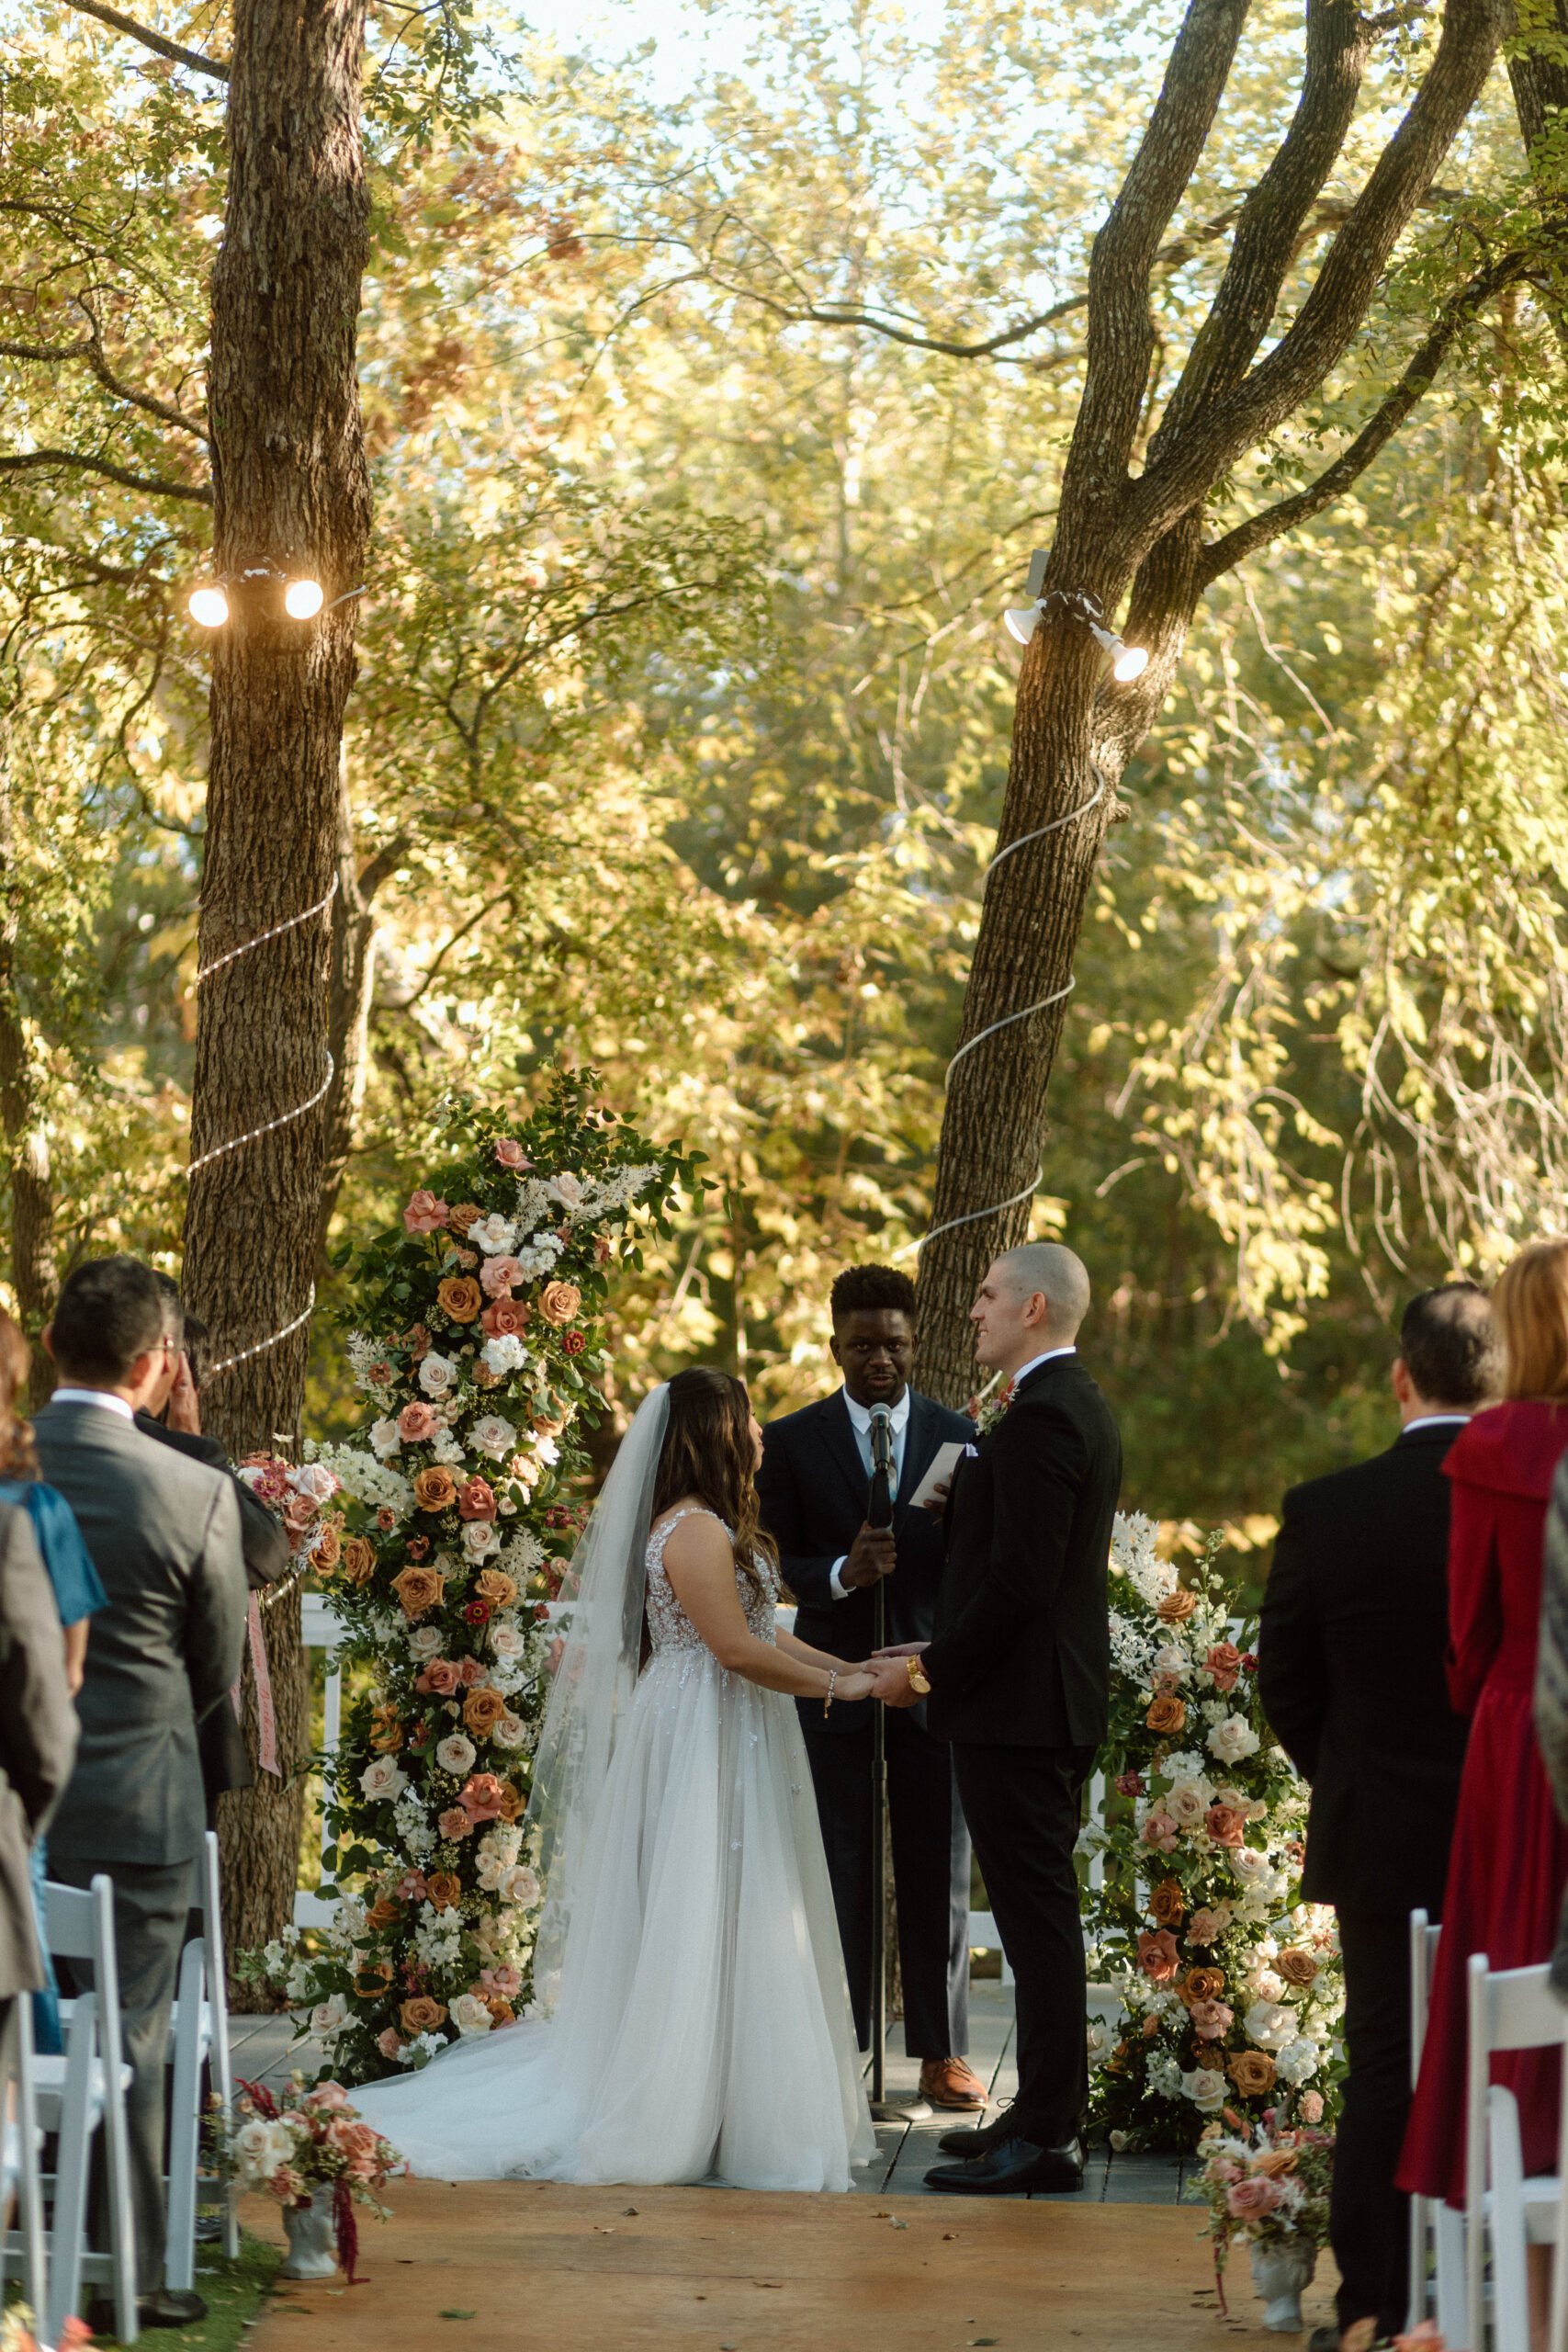 Breathtaking riverside garden ceremony at Casa Blanca Wedding in Austin, Texas, with autumnal foliage and elegant floral arrangements.